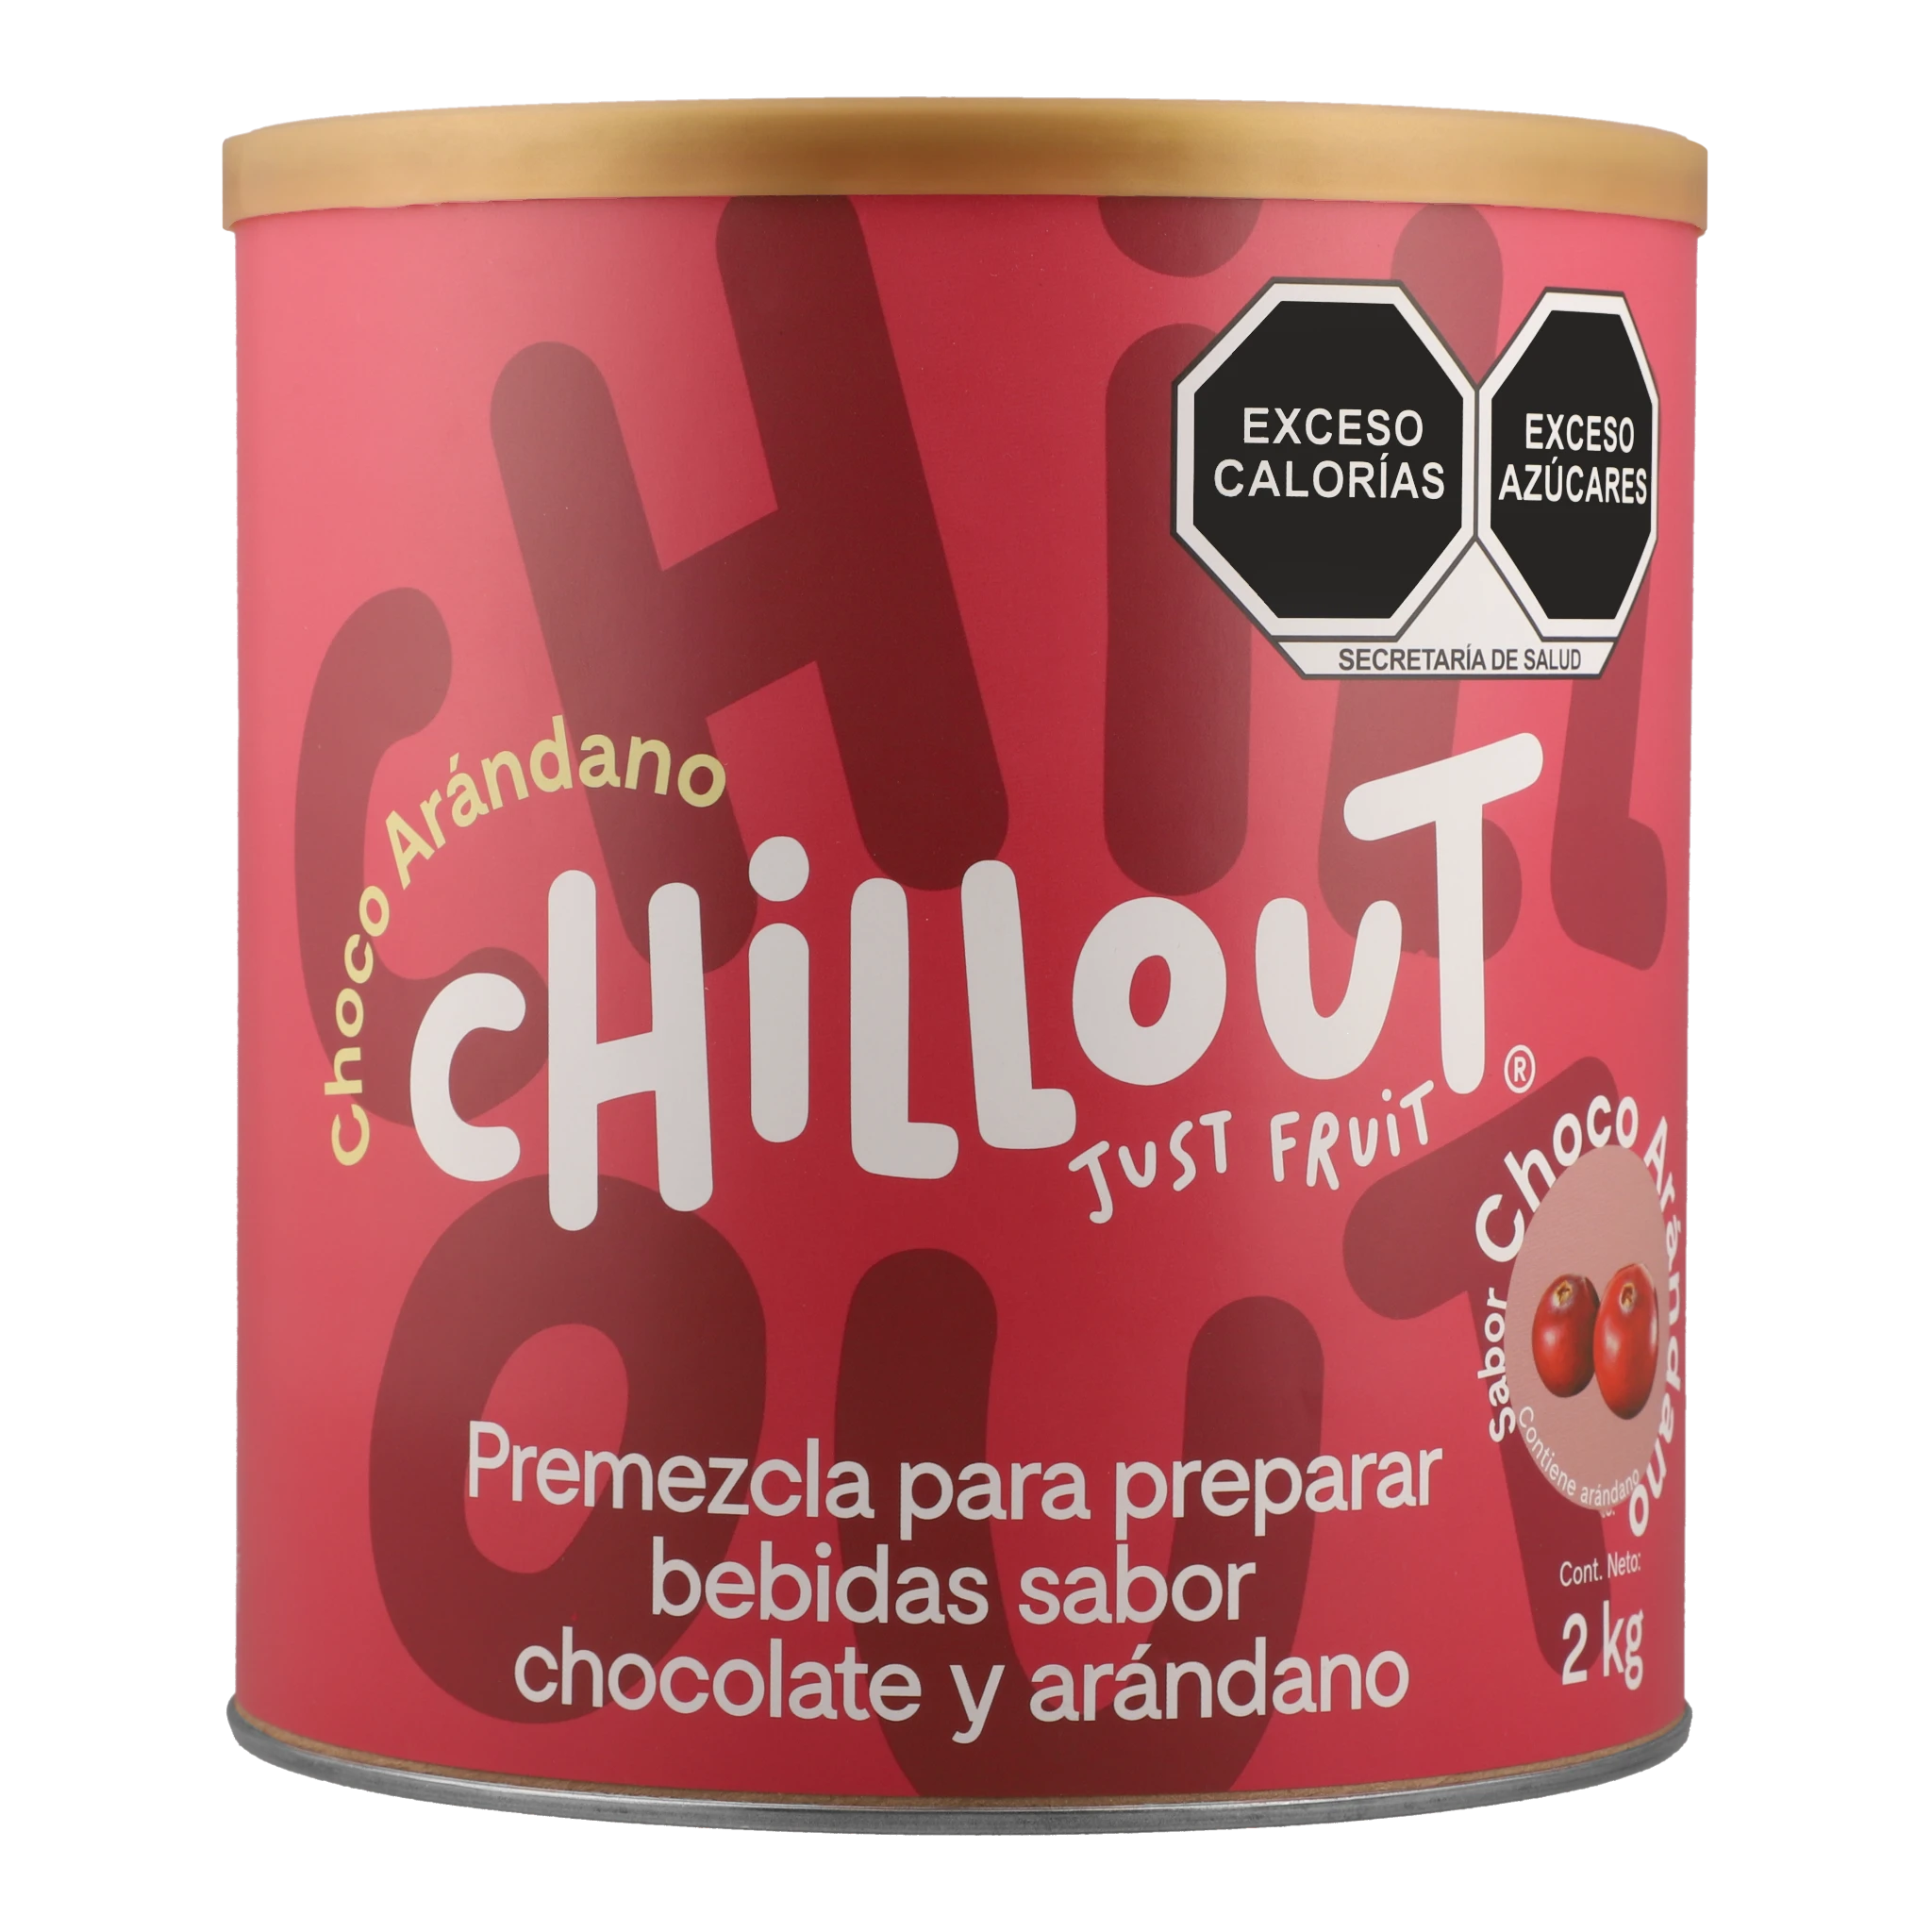 Chillout just fruit base en polvo sabor choco-arandanos bote 2 kg